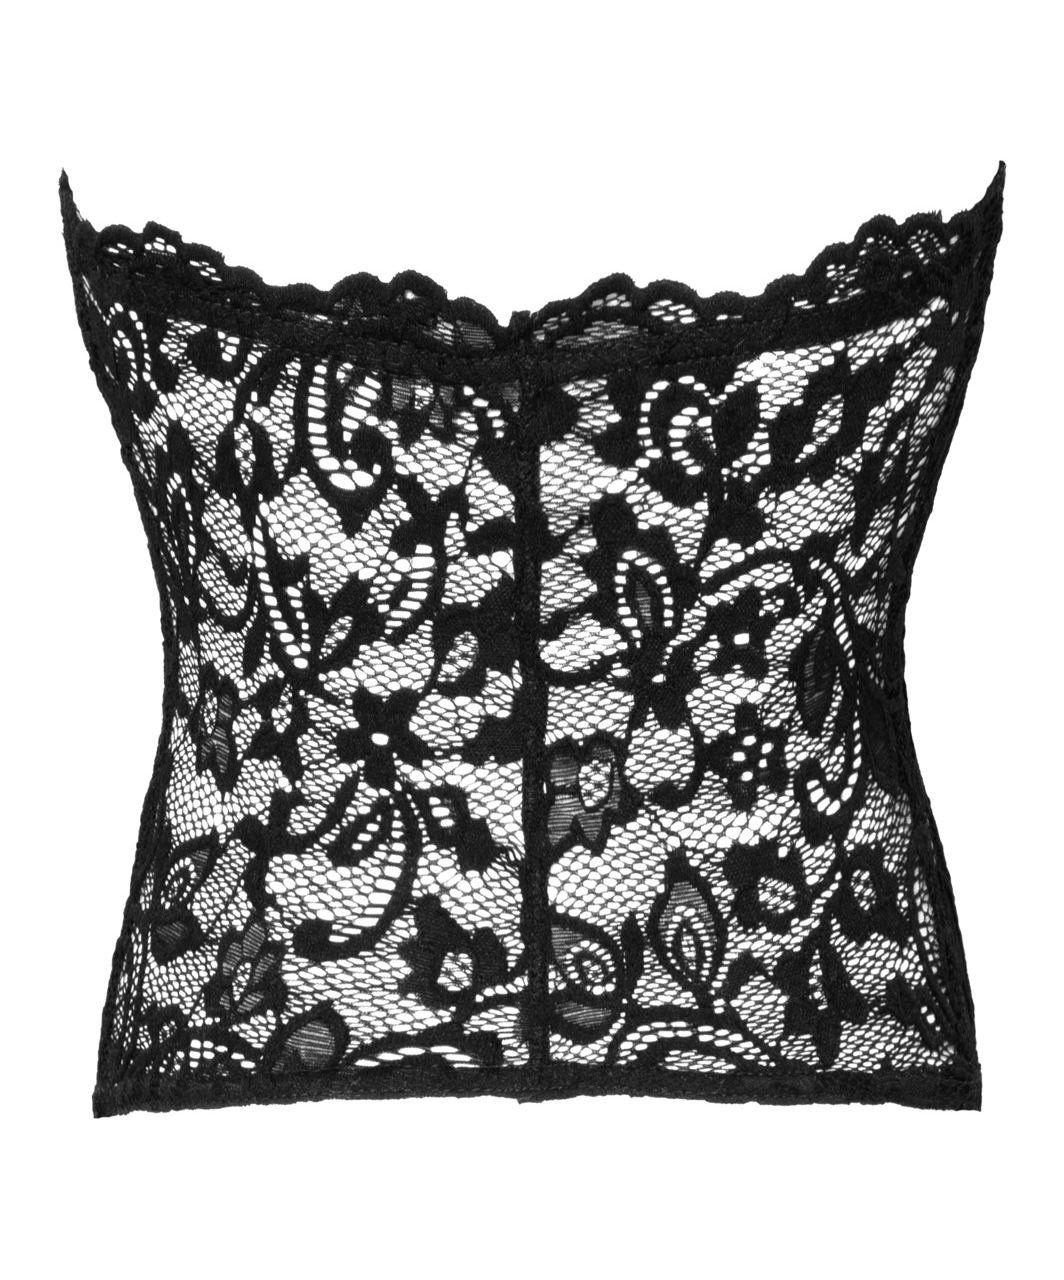 Noir Handmade black lace bustier